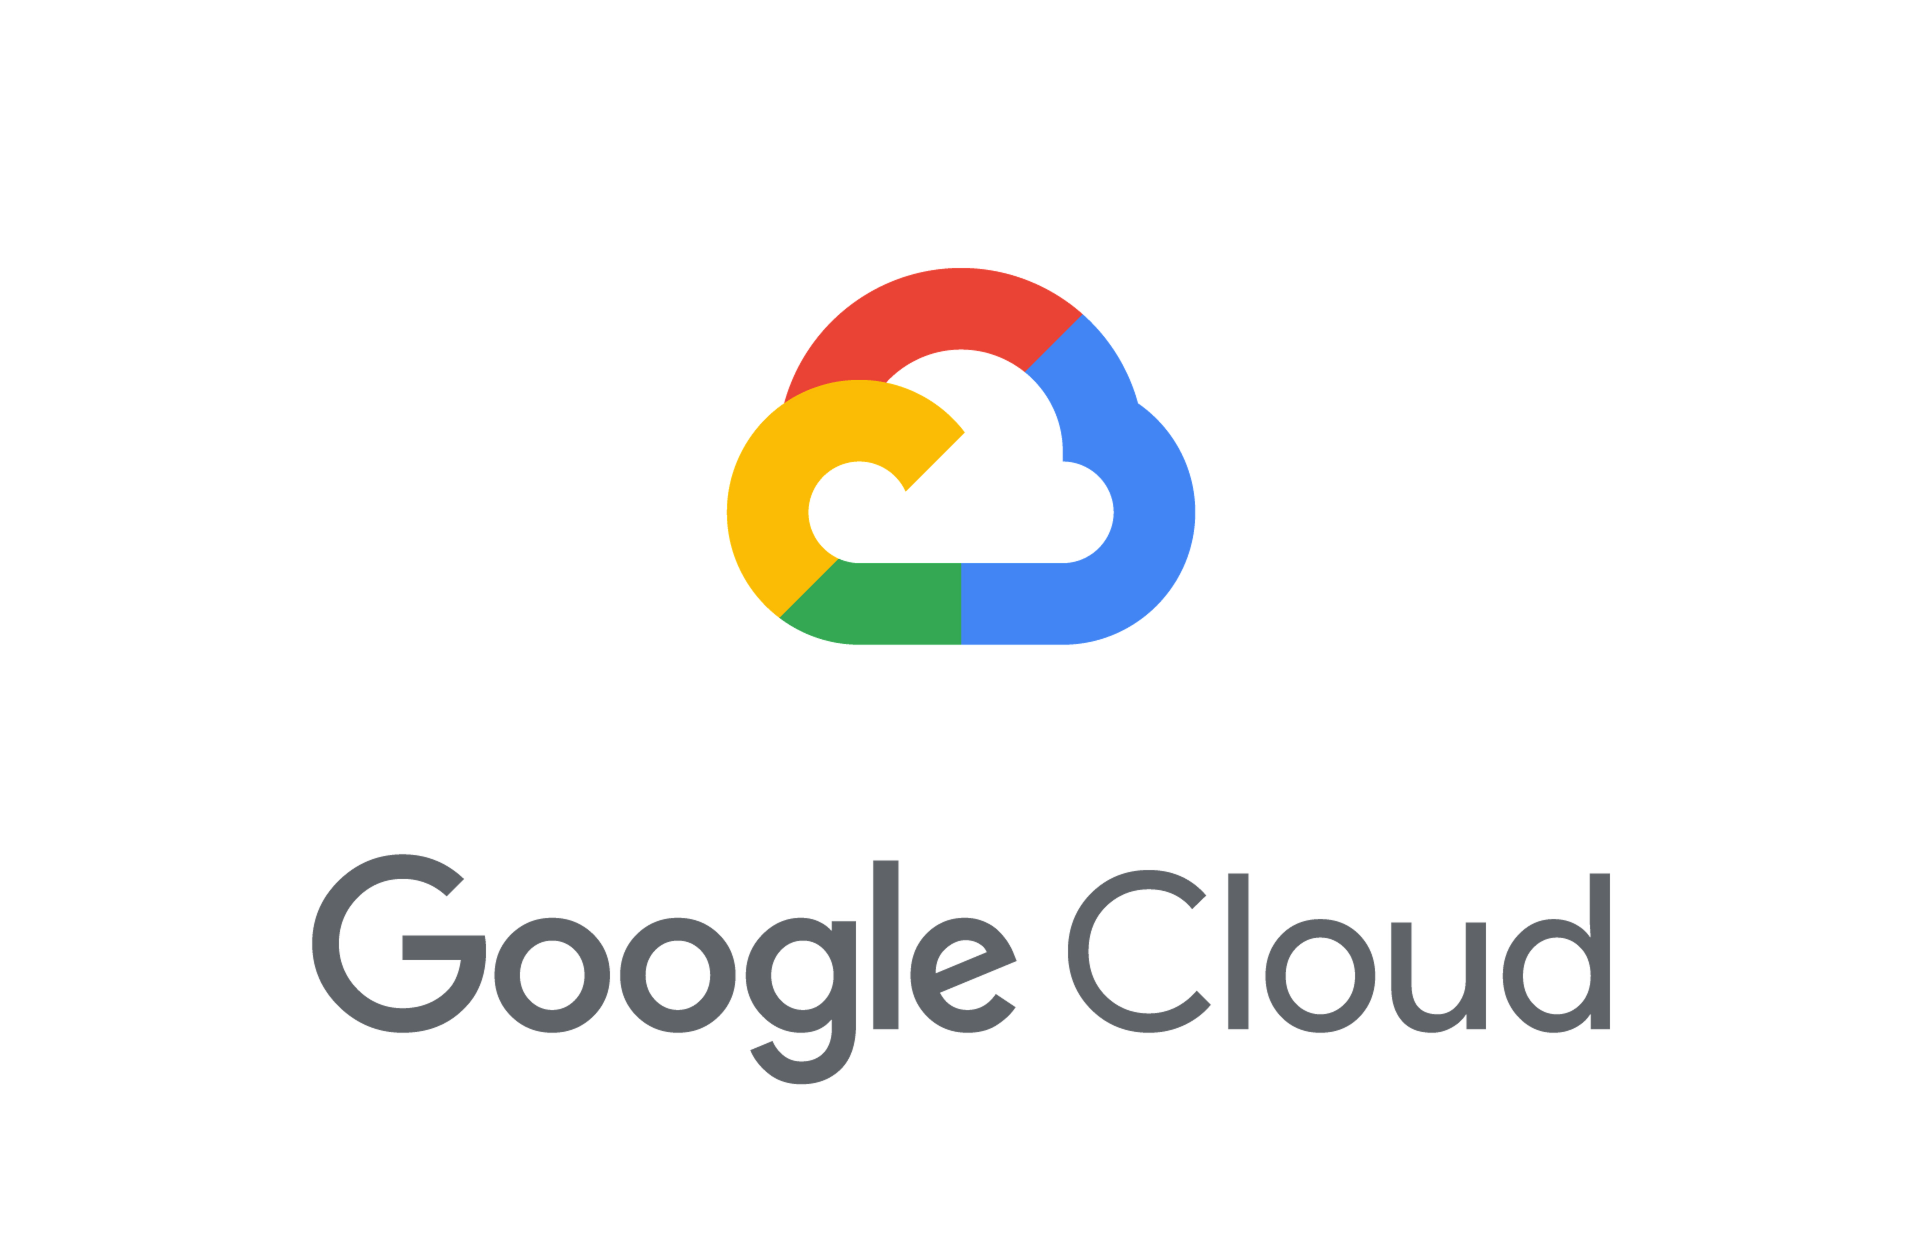 Architecting with Google Cloud Platform: Design and Process